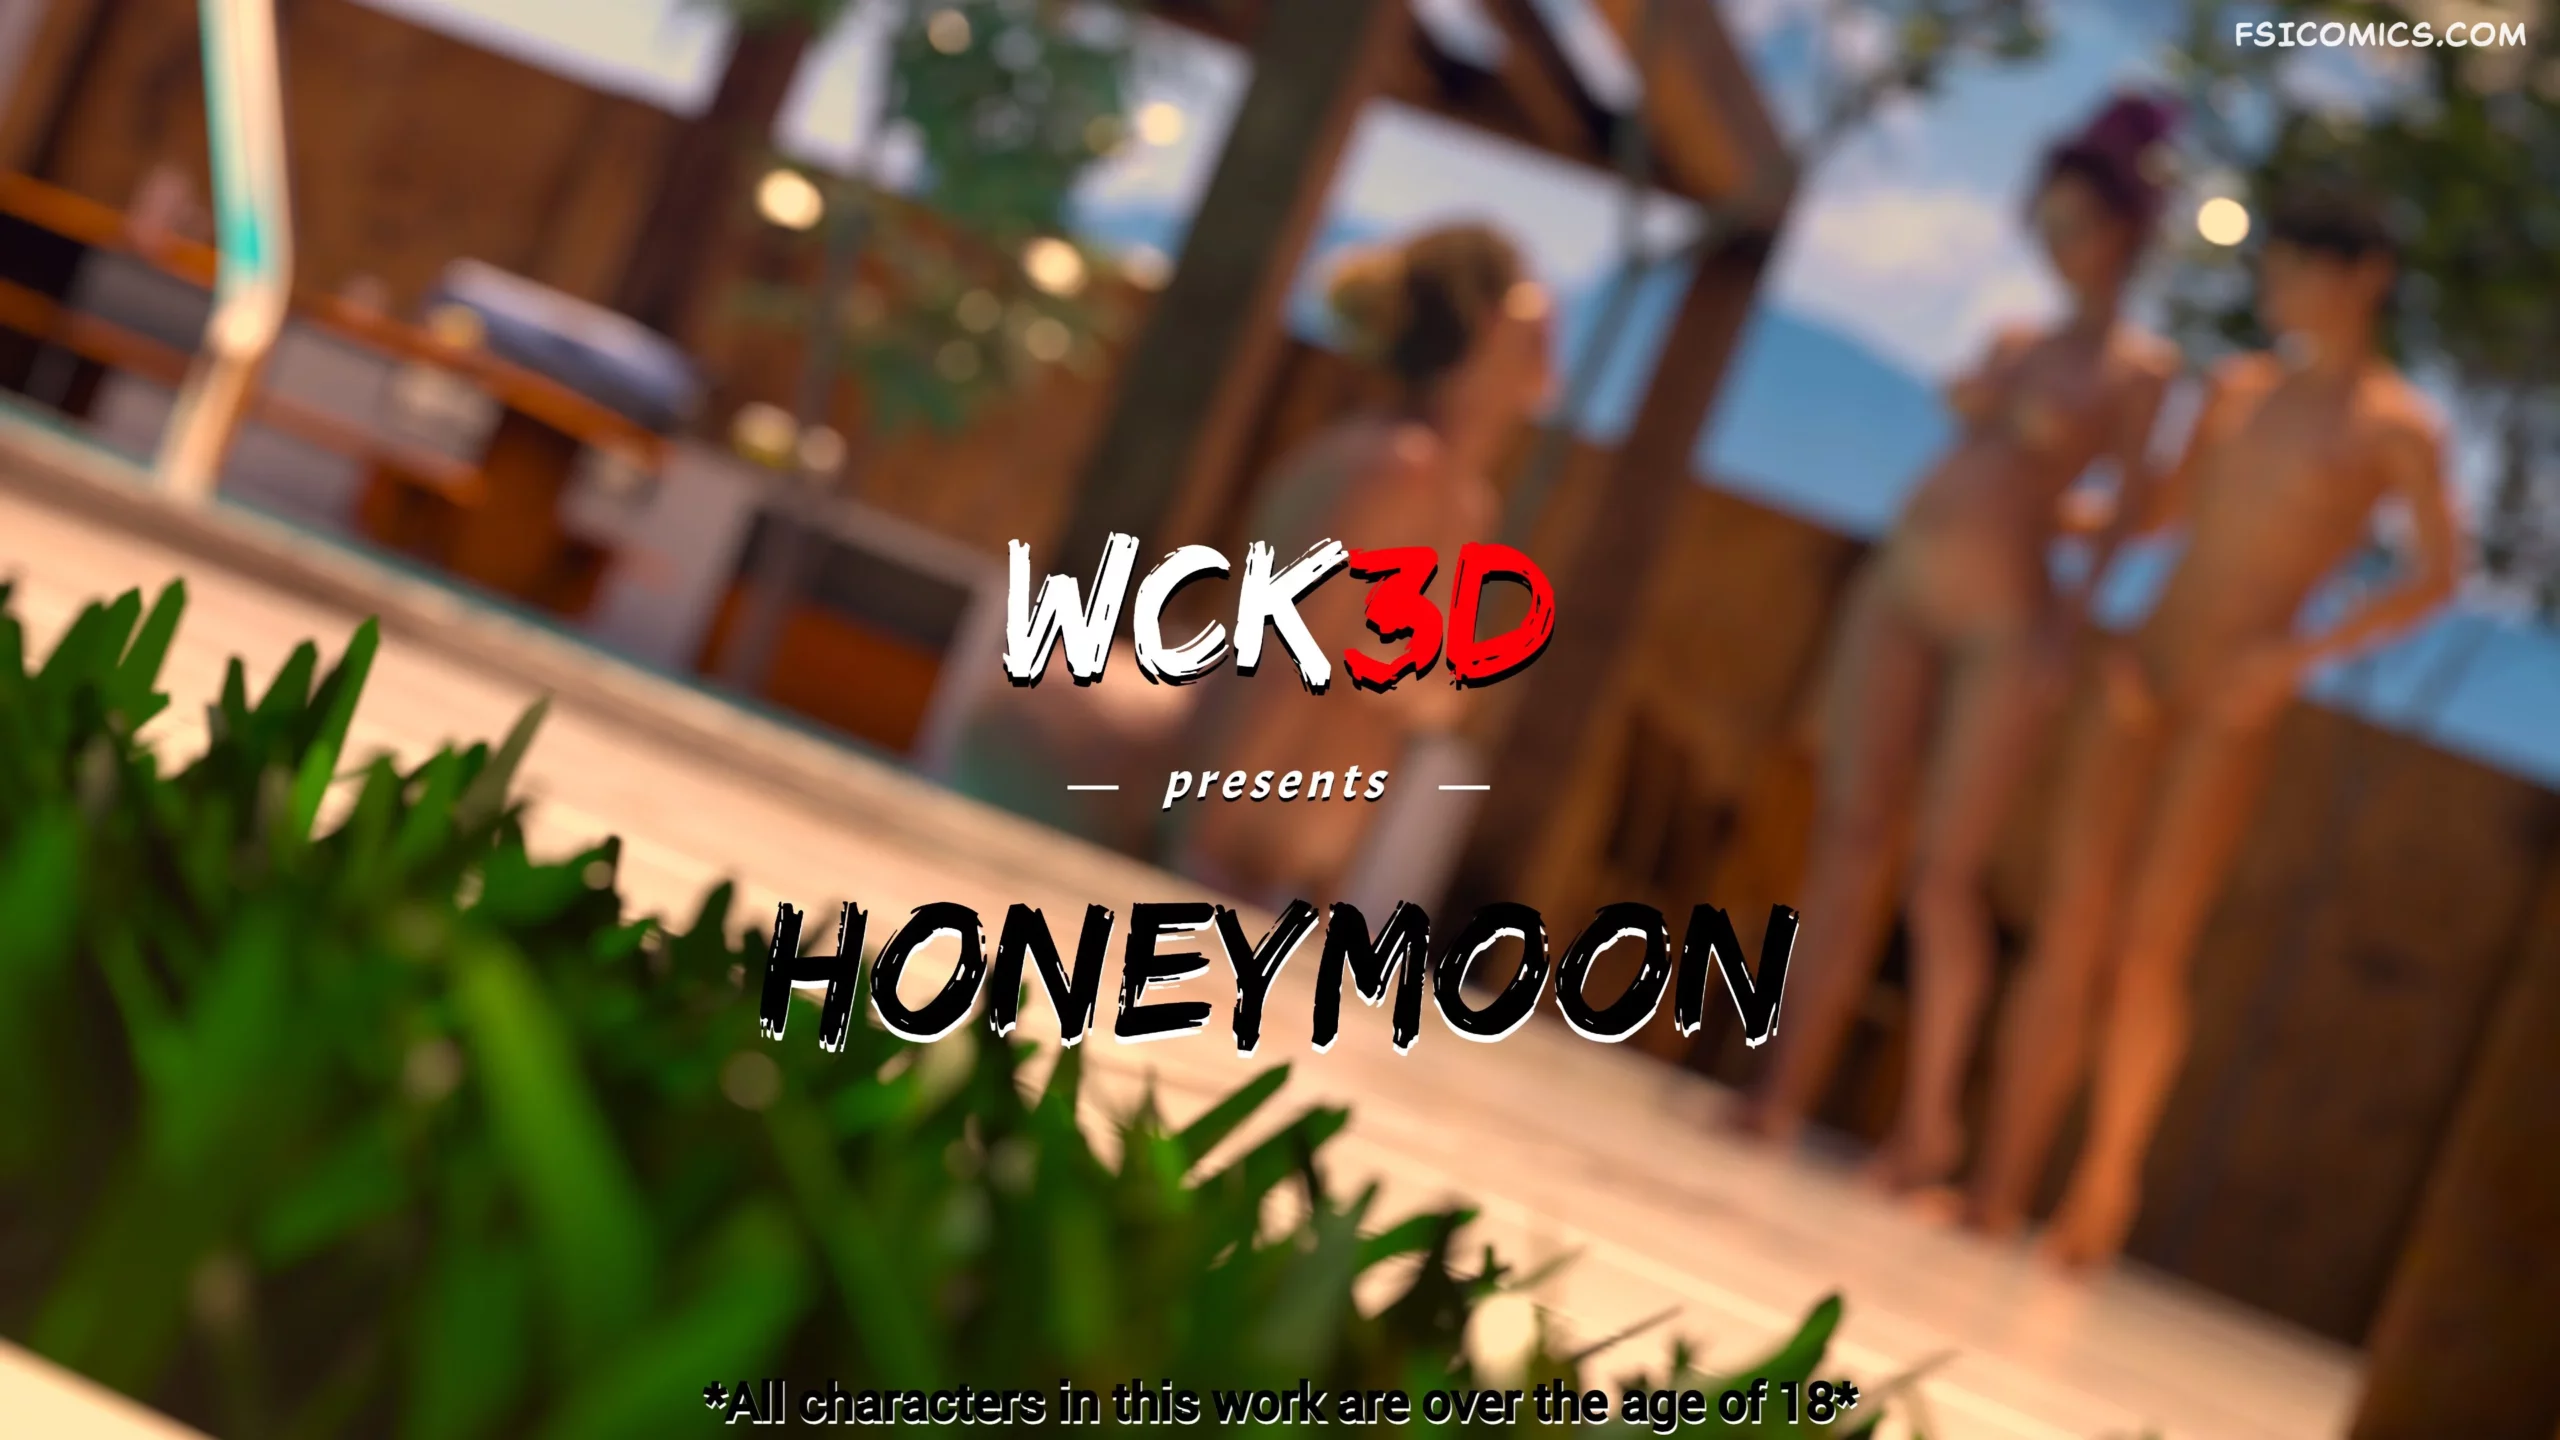 Between Us - Honeymoon - WCK3D - 233 - FSIComics